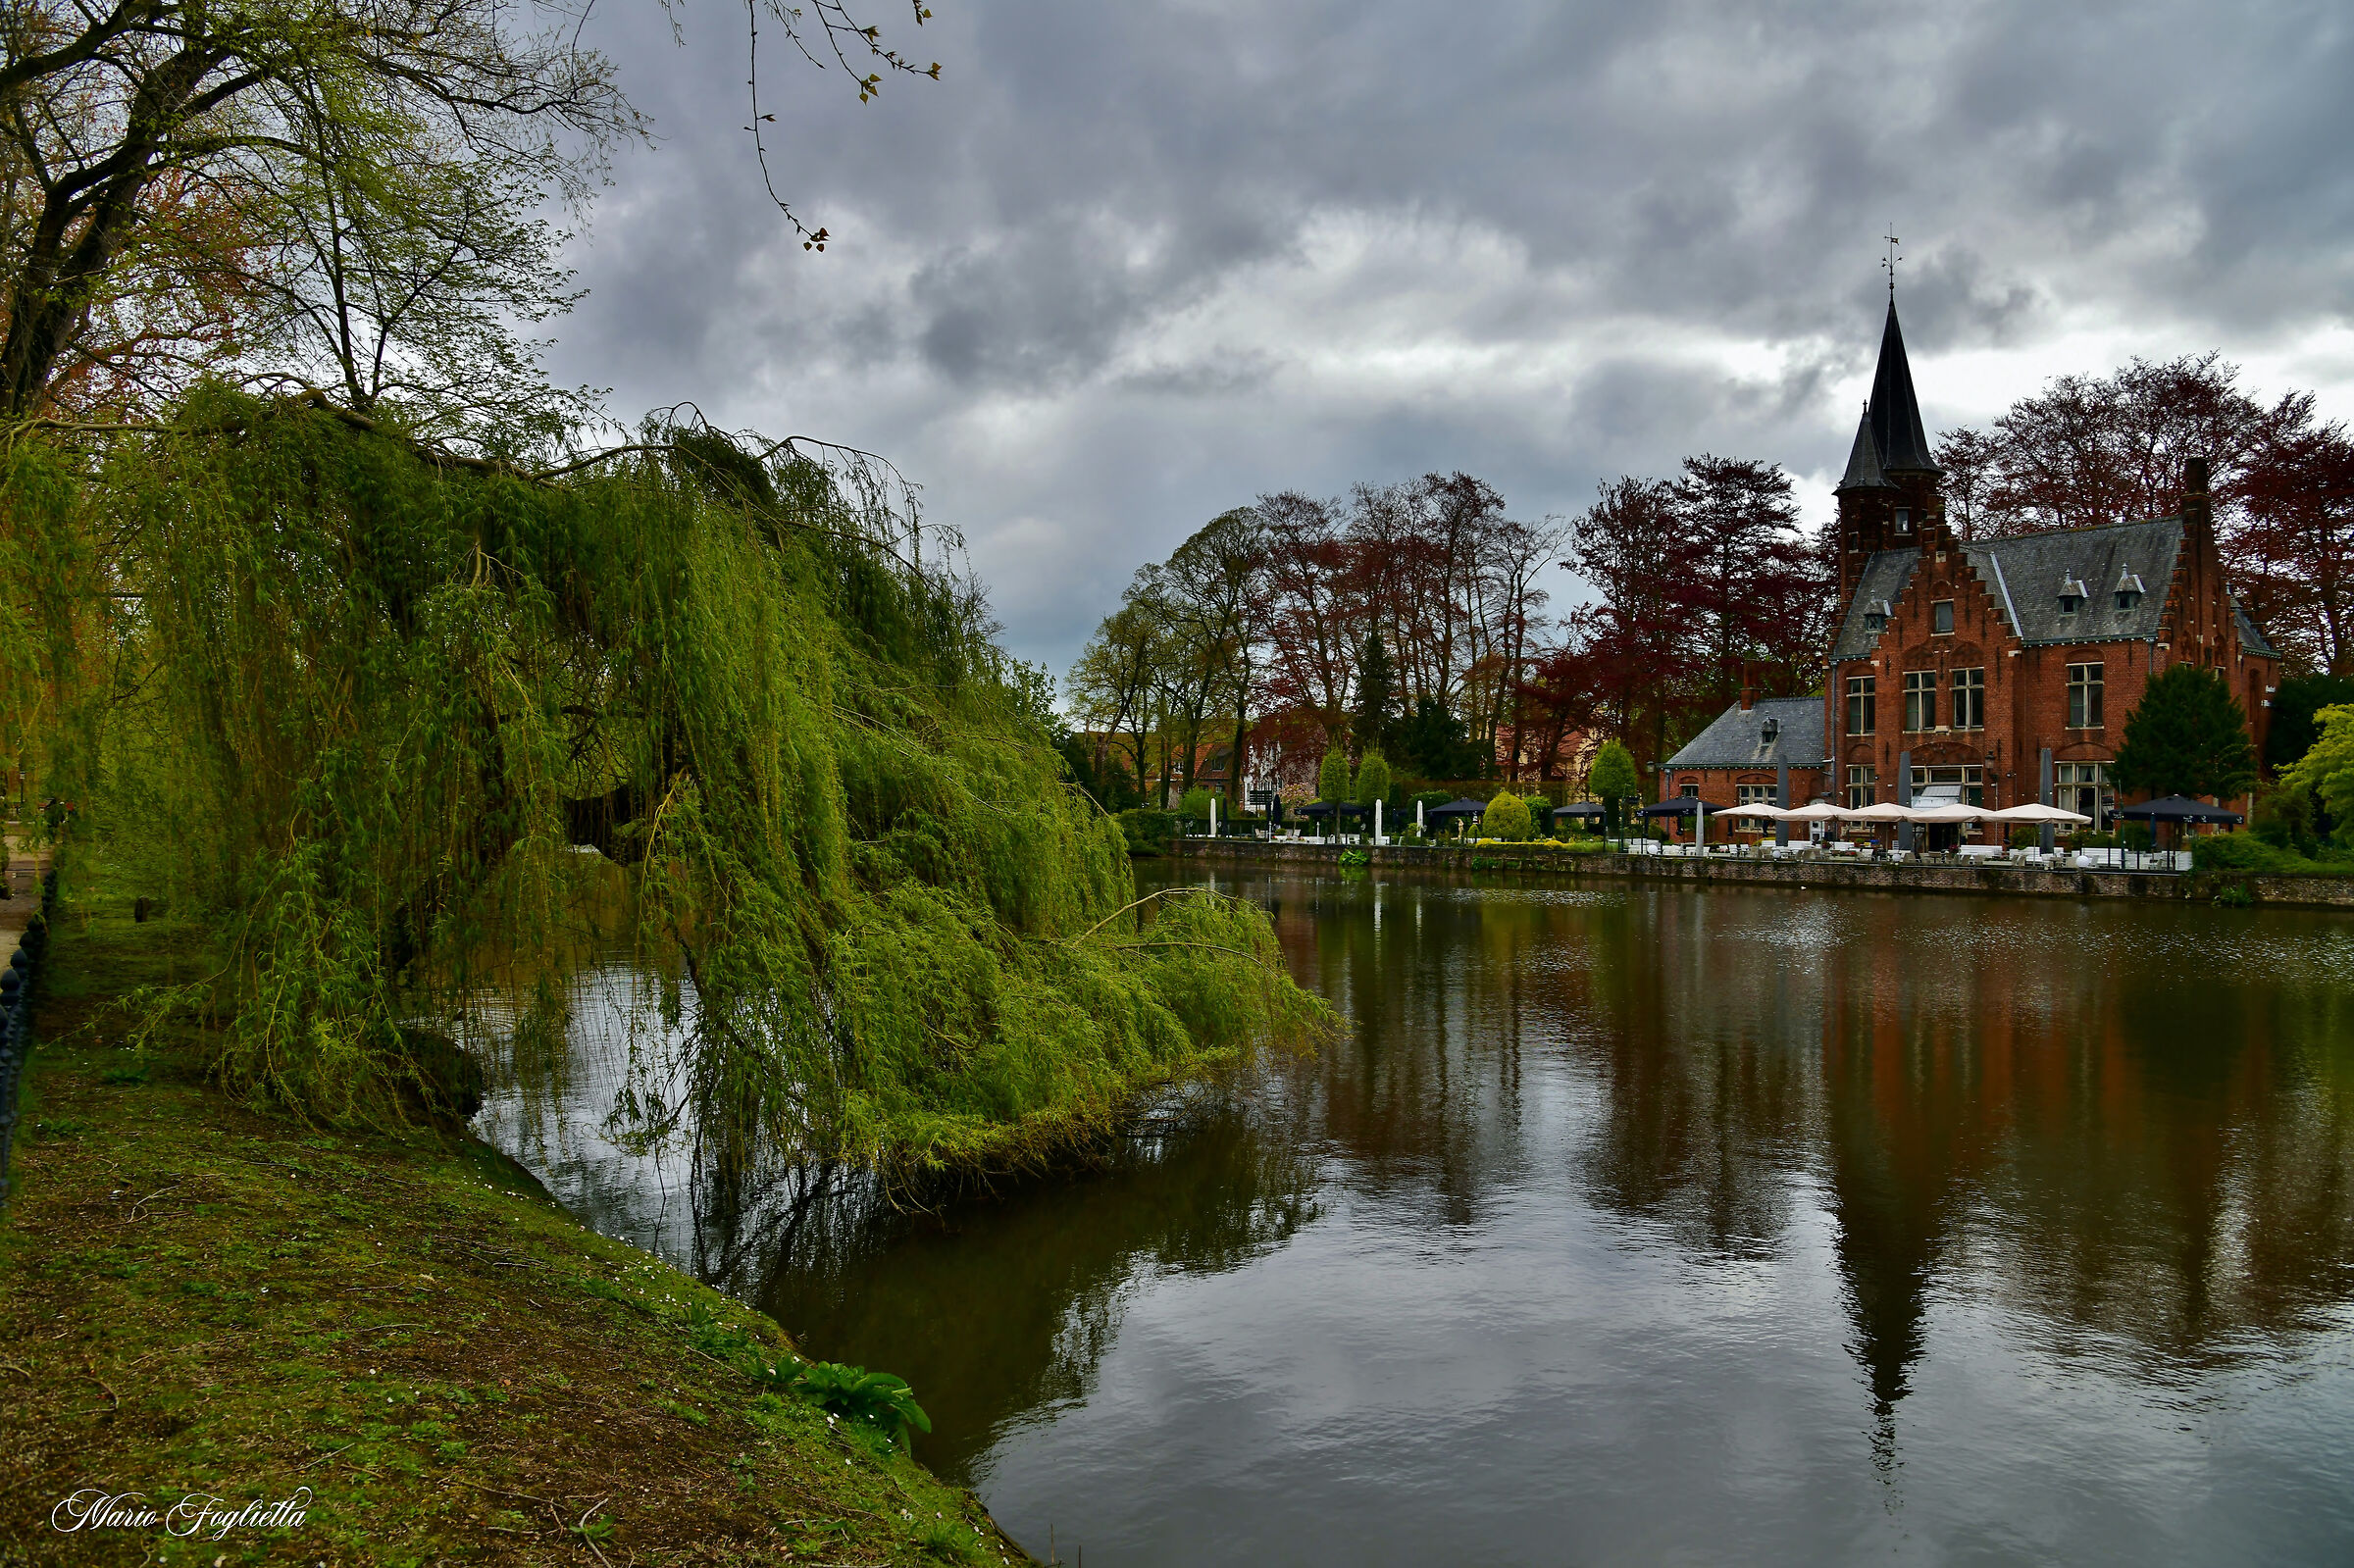 Glimpses of Bruges...